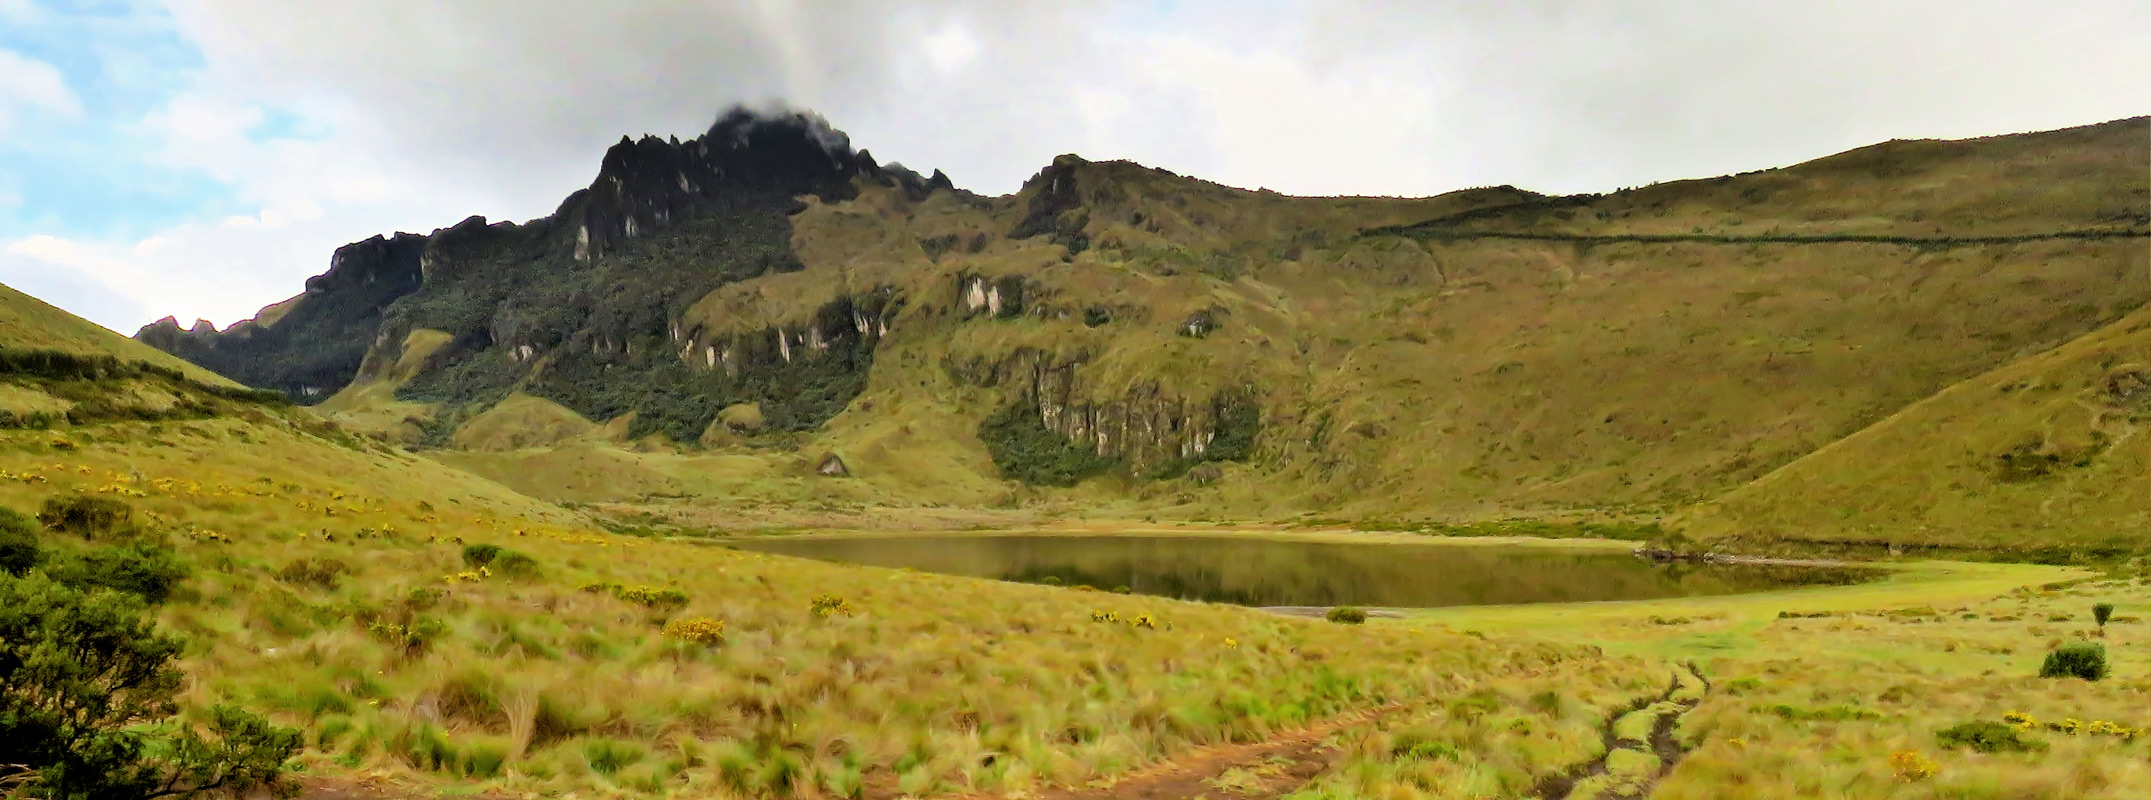  Otavalo - Lagunes de Mojanda 